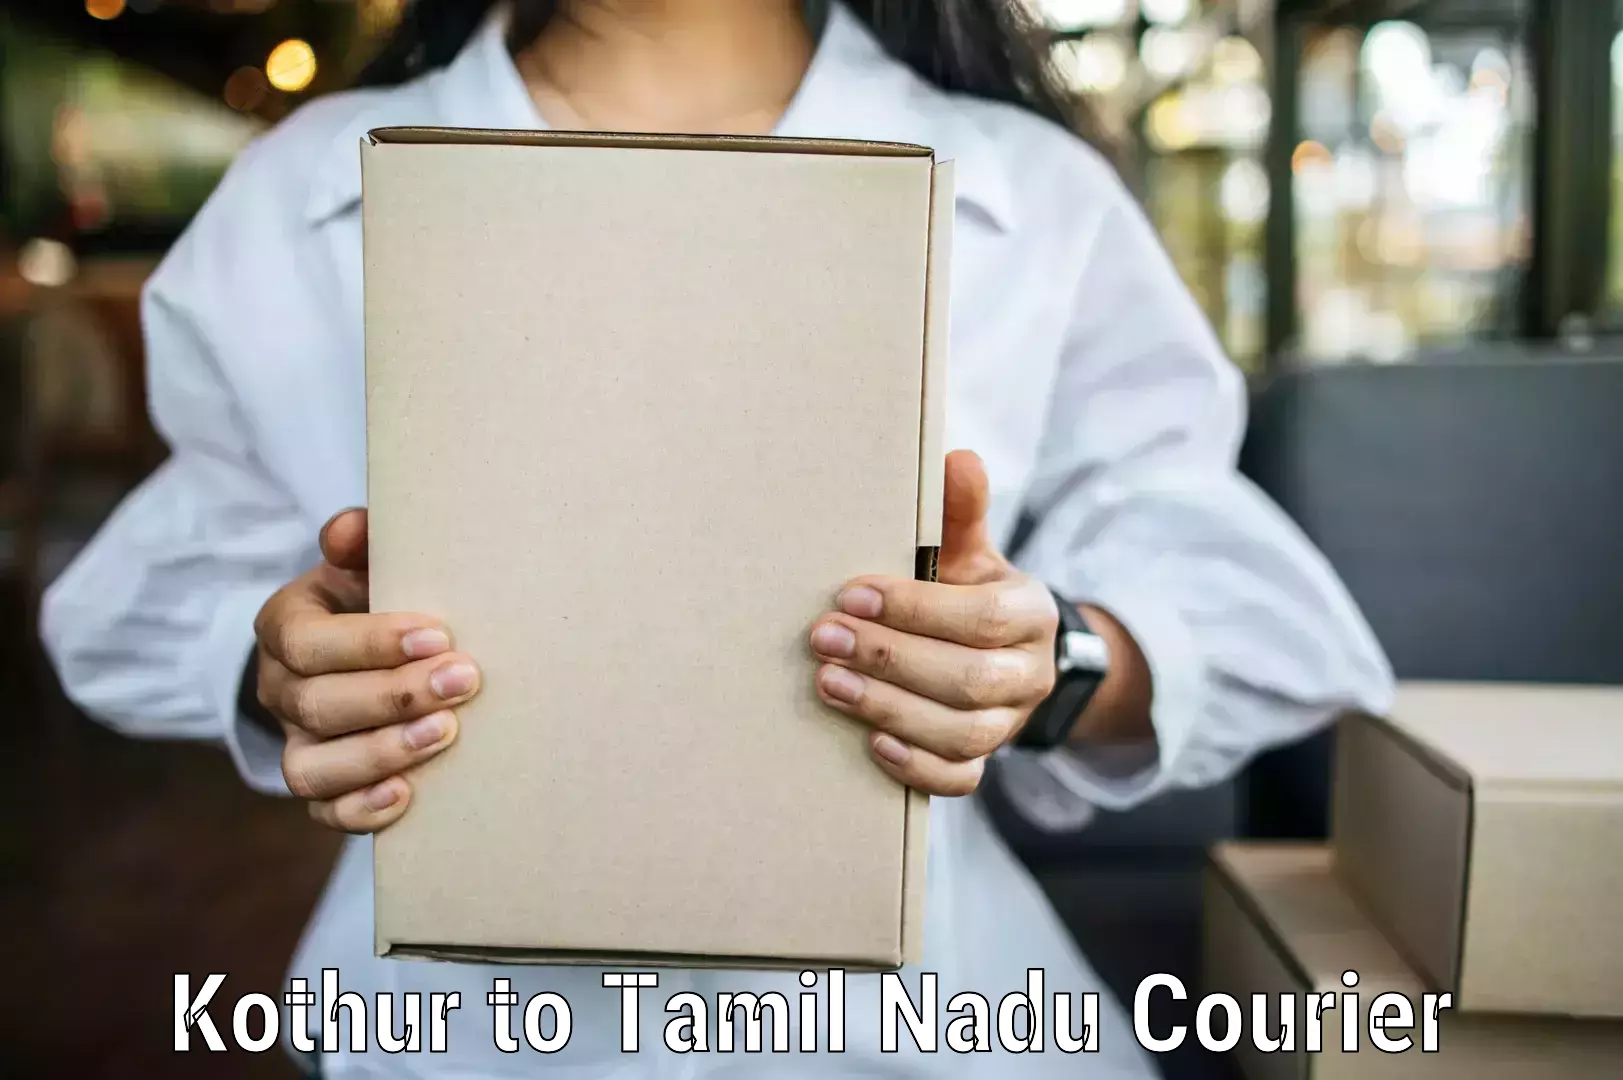 Efficient logistics management Kothur to Tamil Nadu